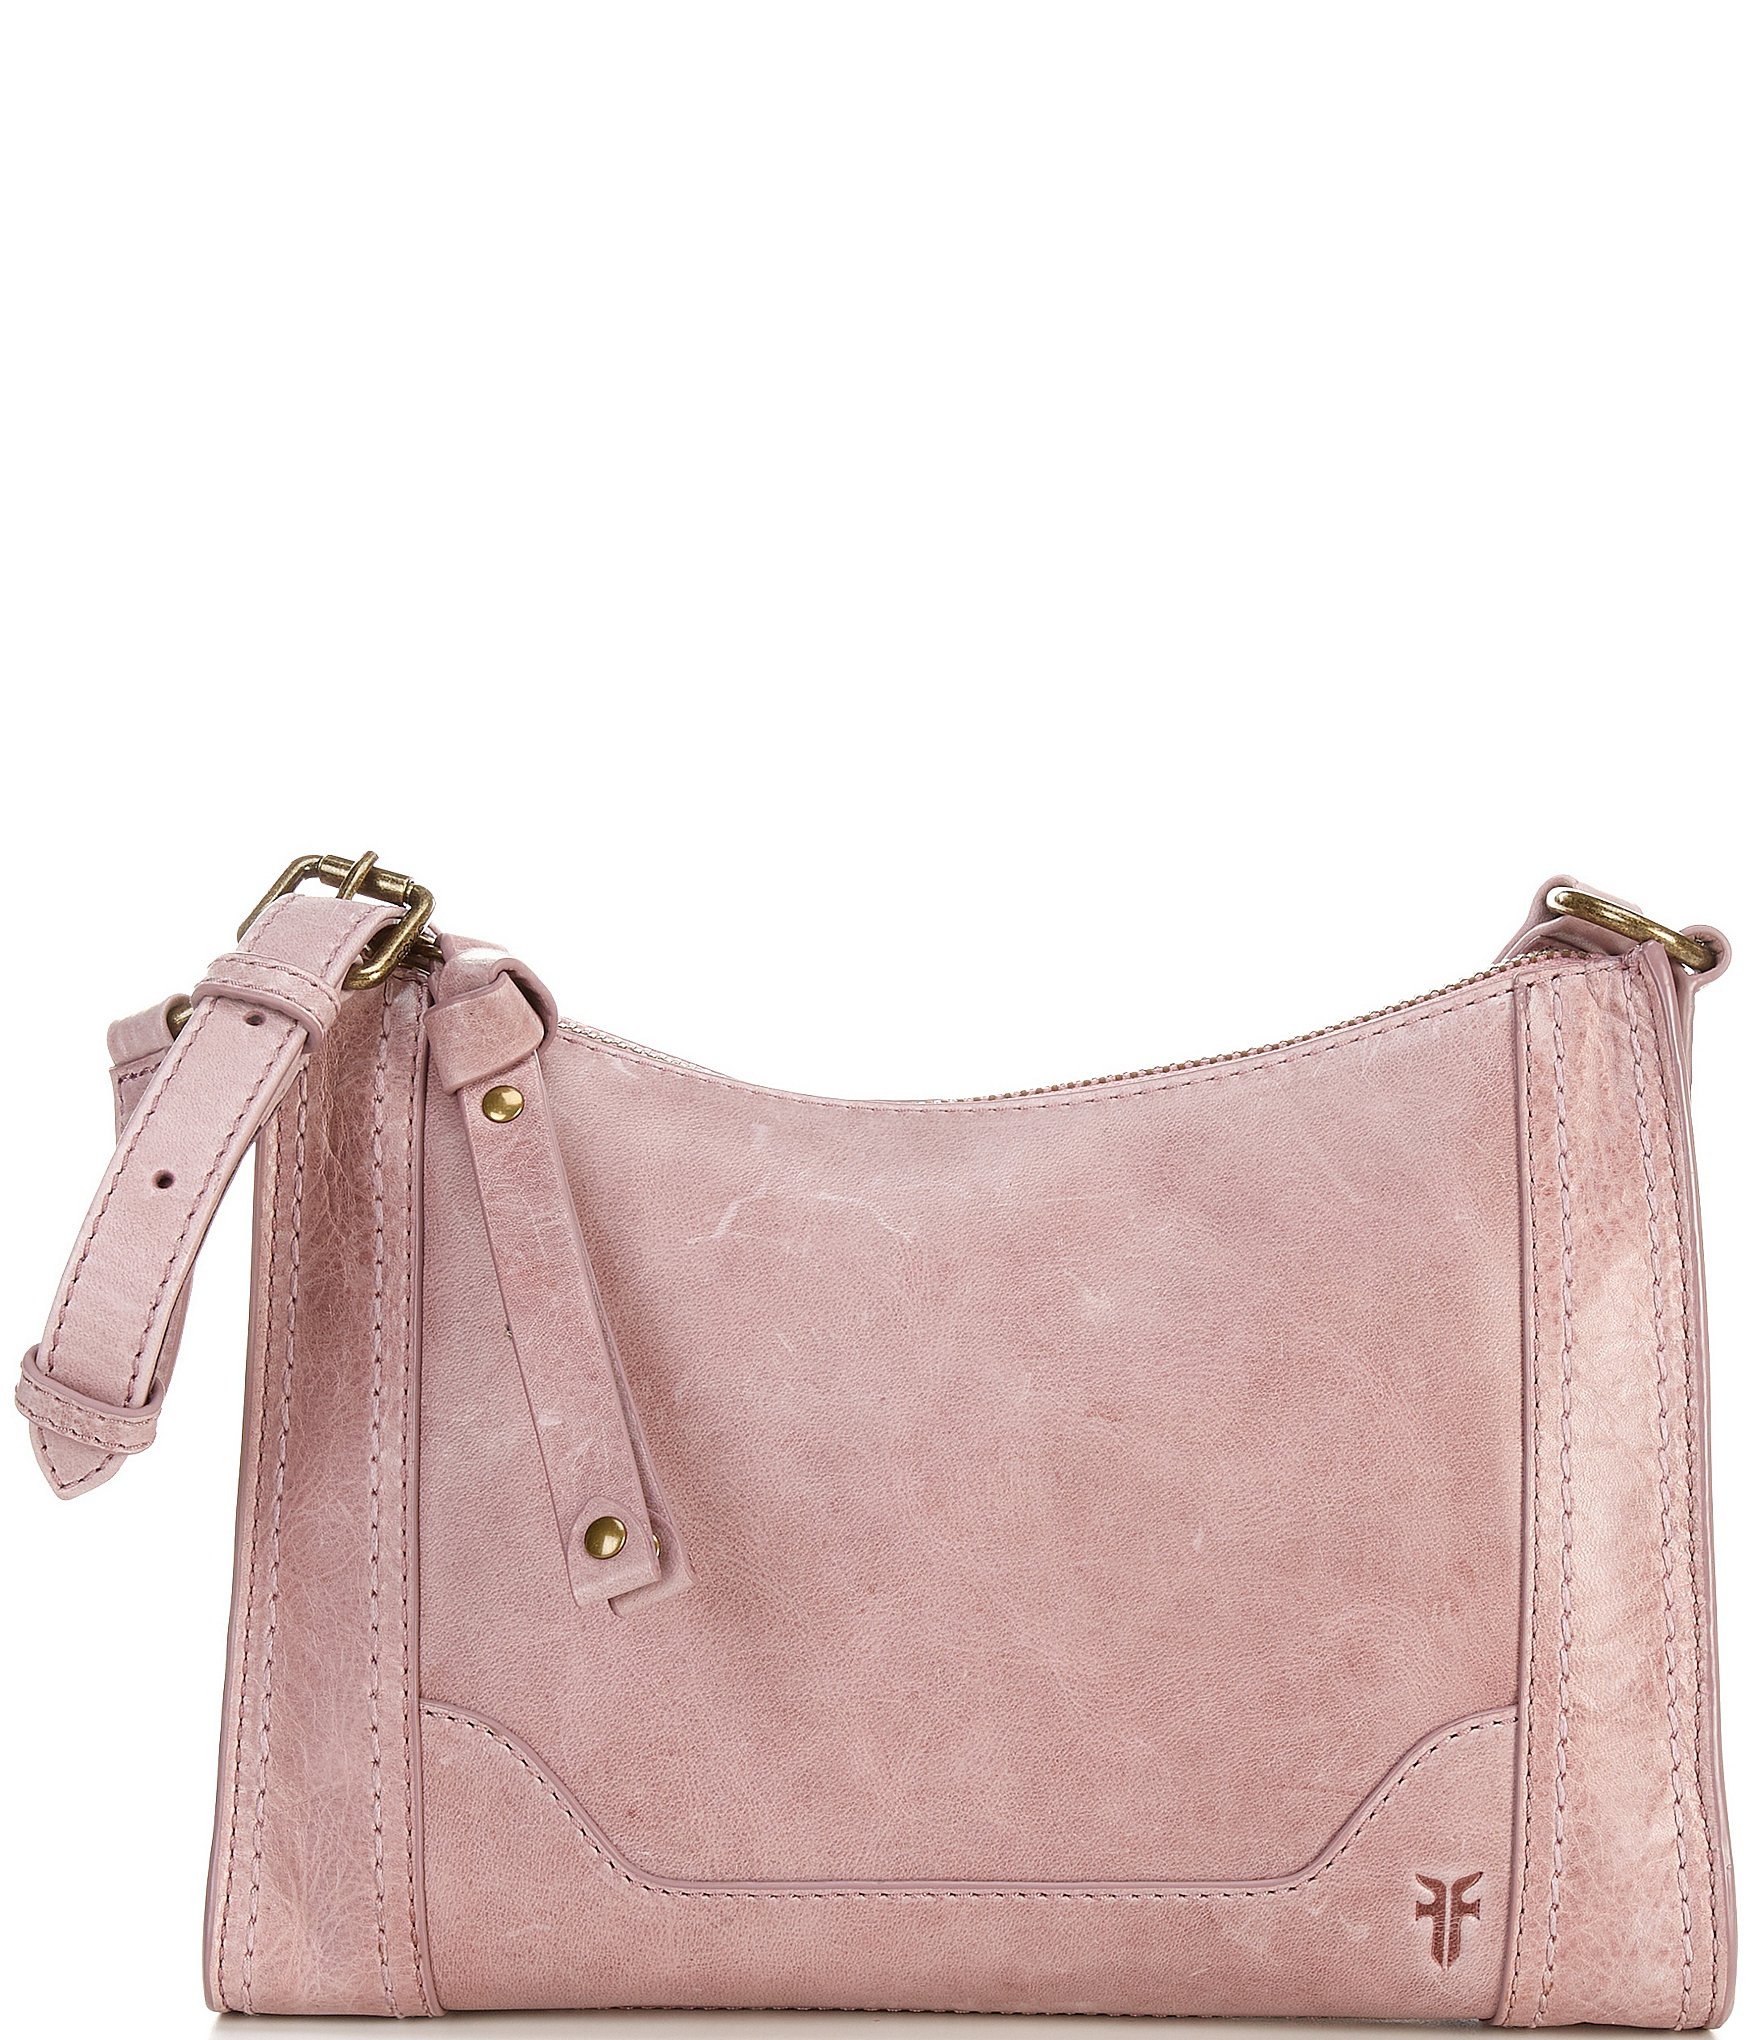 Frye Leather Clutch Handbags | Mercari